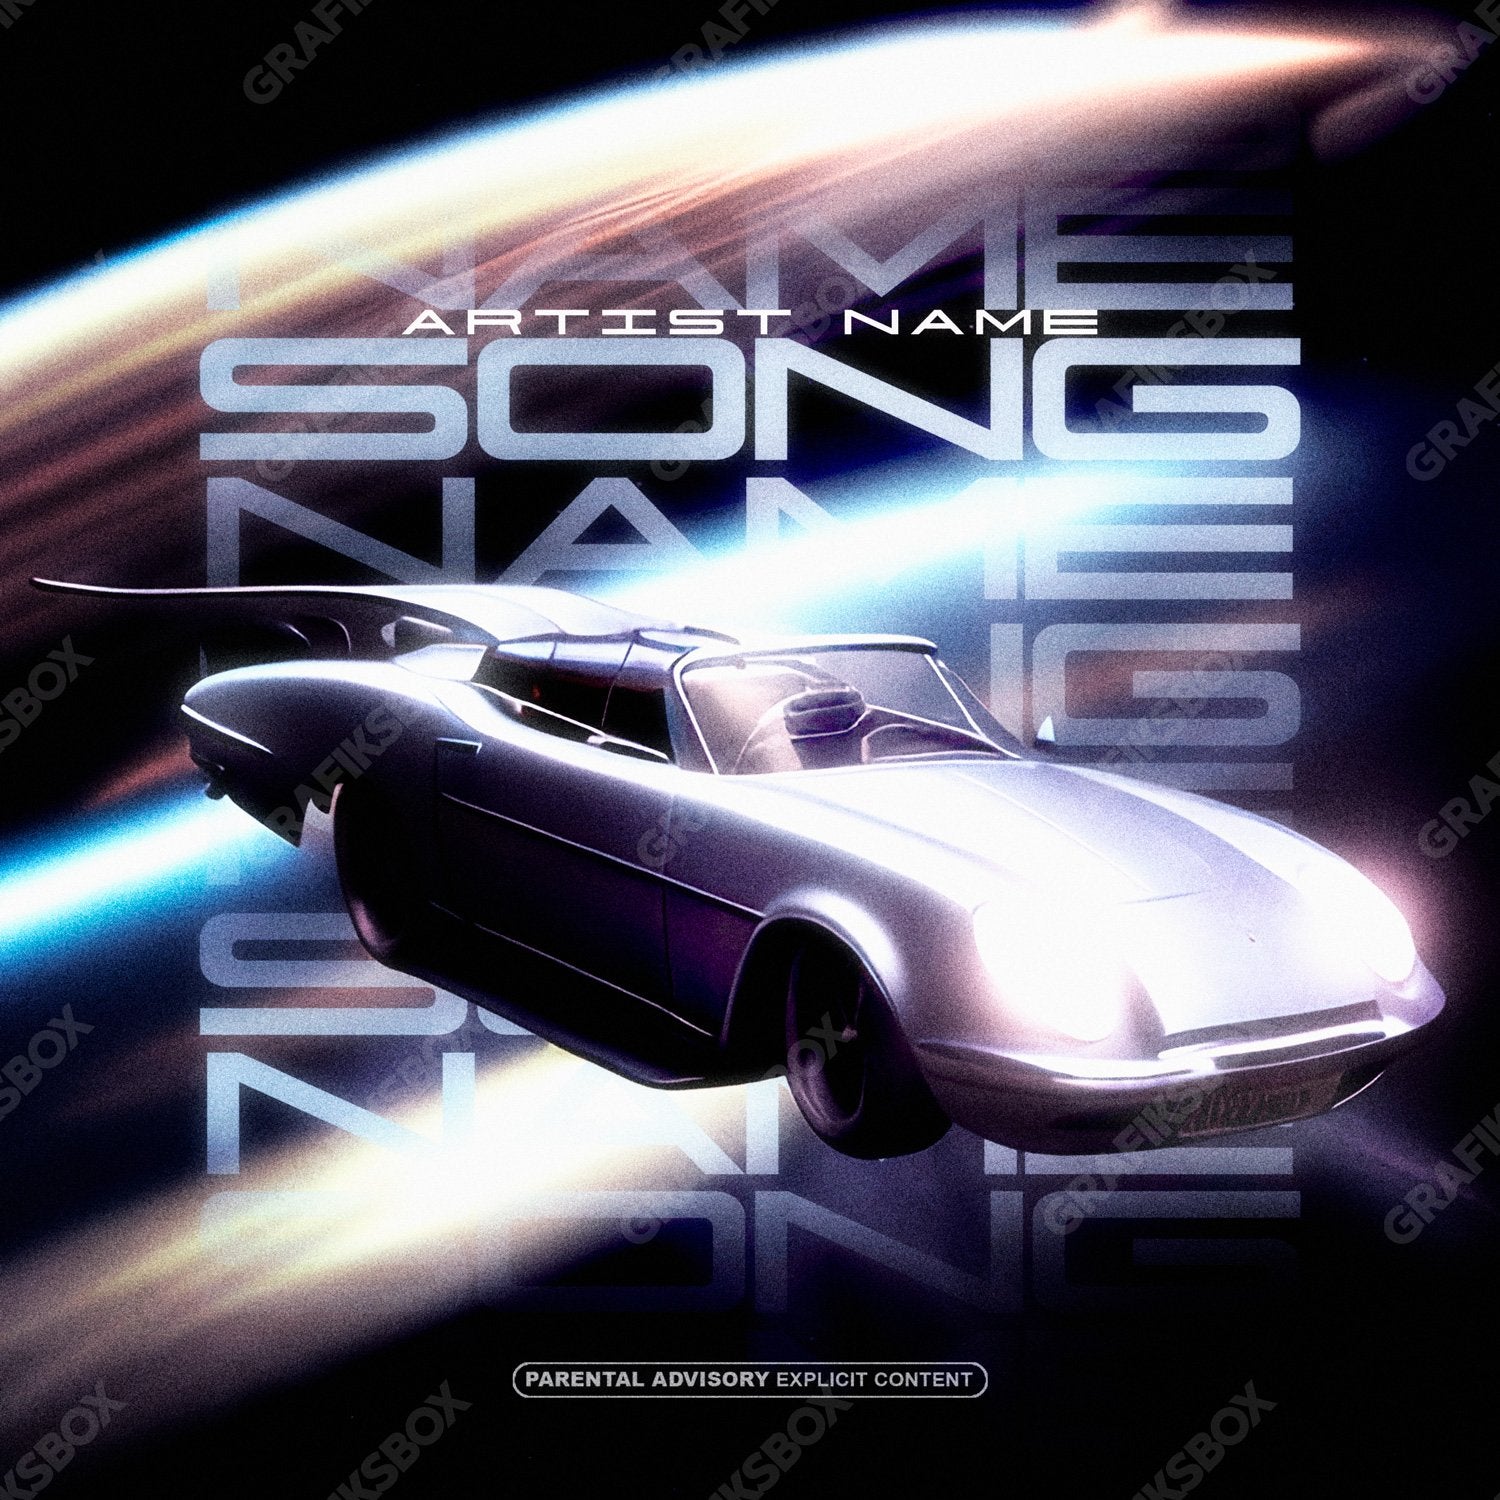 Galaxy Race premade cover art